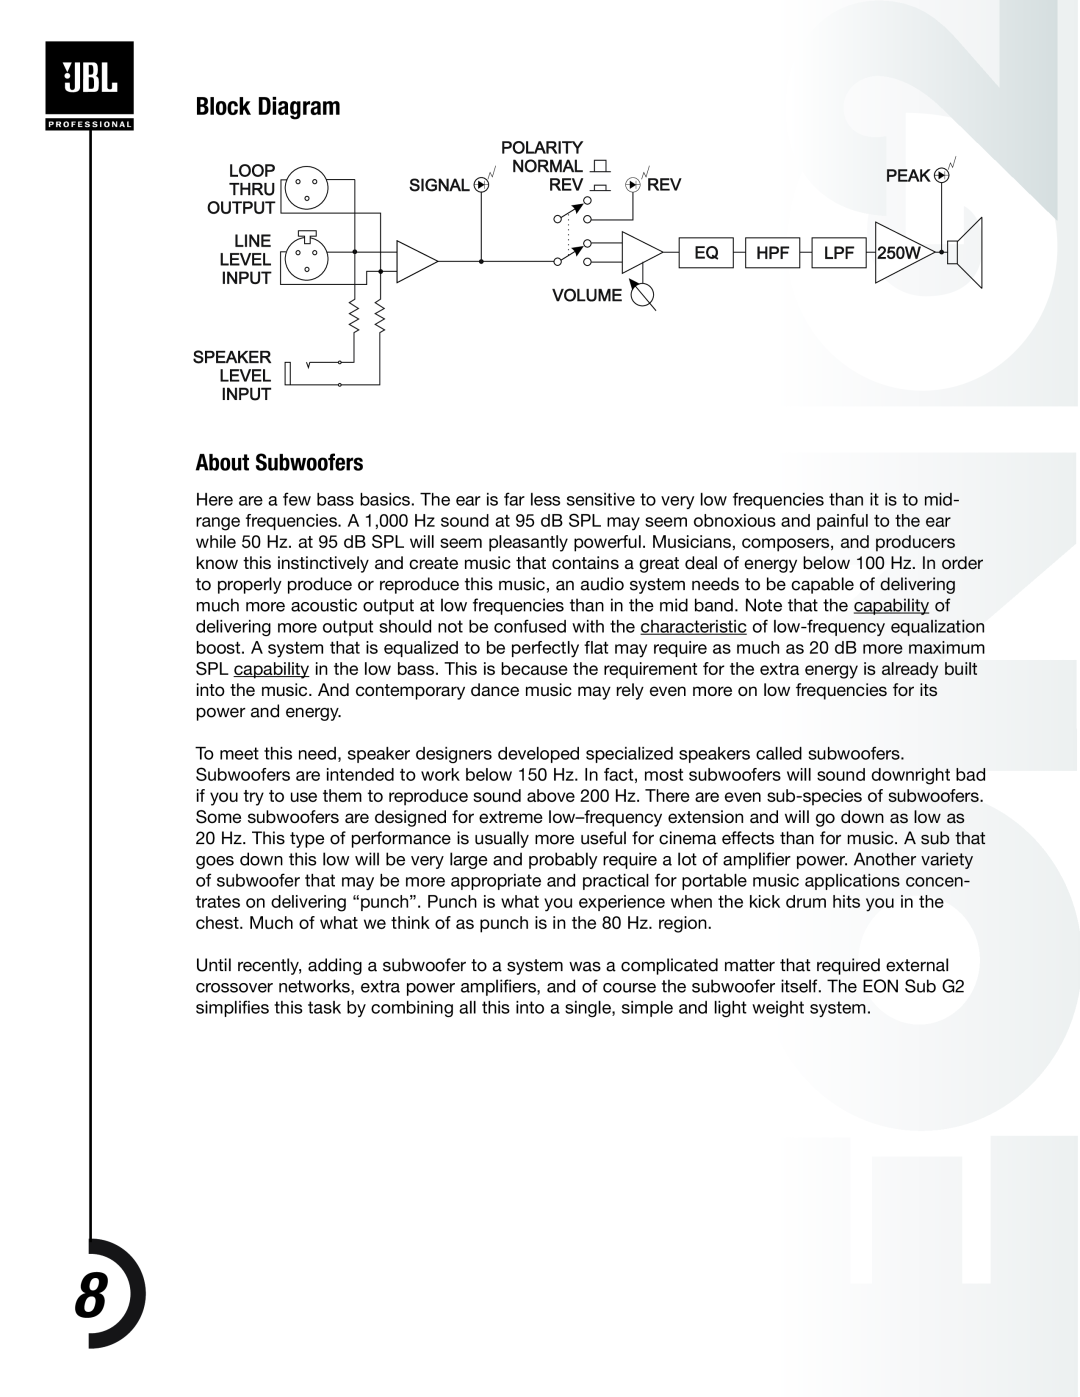 JBL EON PowerSub G2 manual Block Diagram, About Subwoofers 